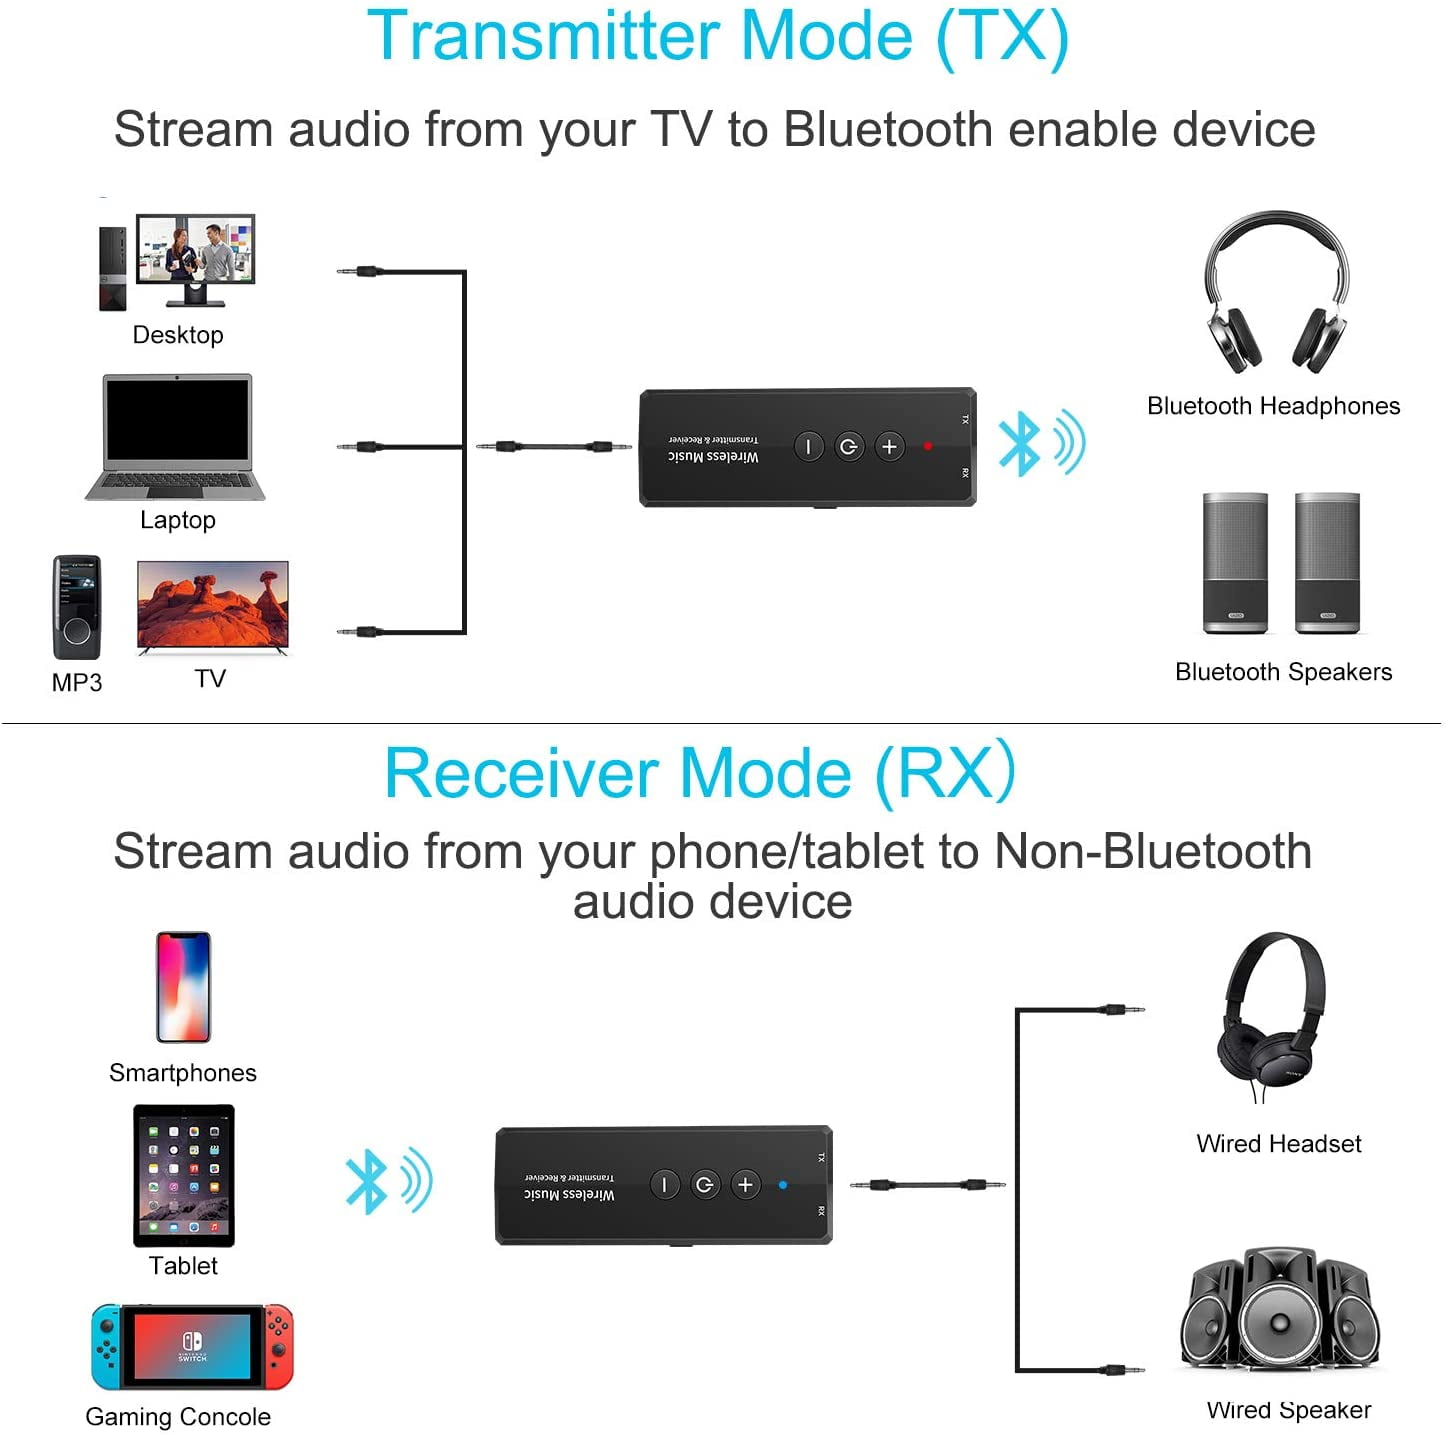 Nfc Bluetooth Empfänger Wireless Tranmitter 5.0 FM 3 In 1 Bluetooth Adapter  Computer Universal 3,5 mm Klinke